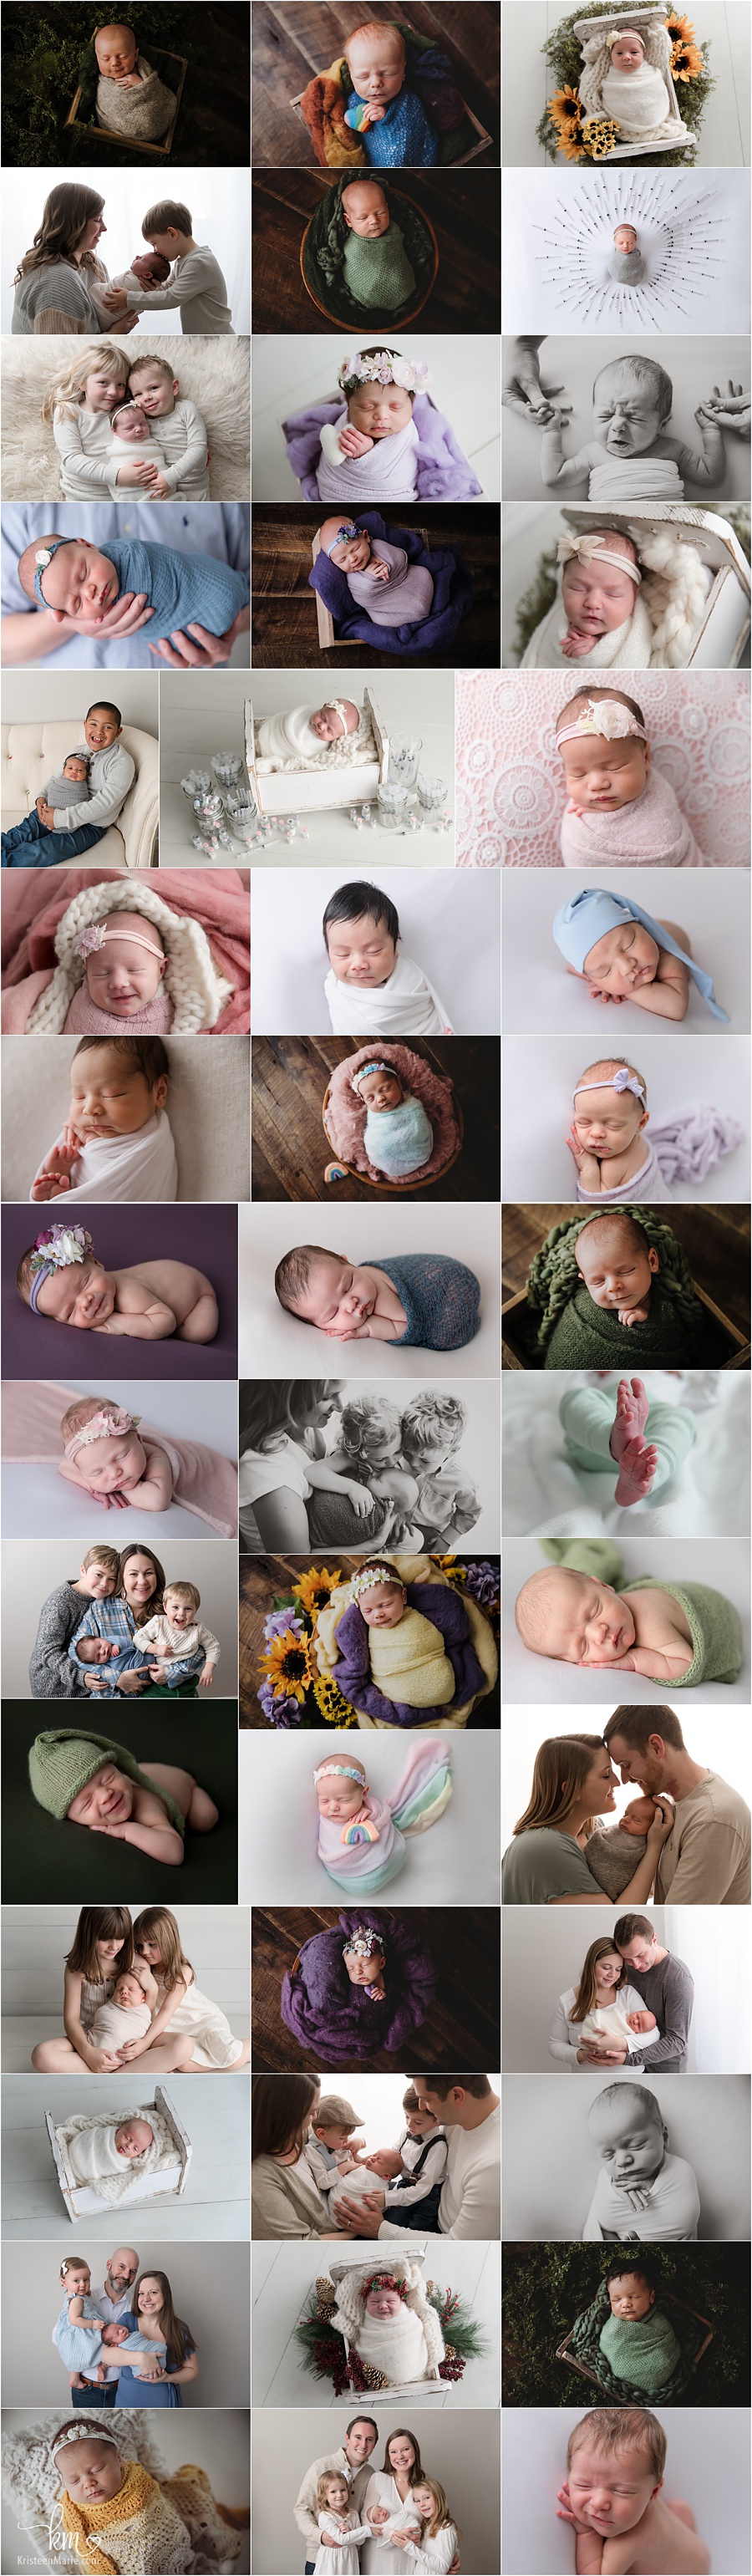 Newborn Photography Session - Kristeen's Newborn Photo Studio in Carmel Indiana